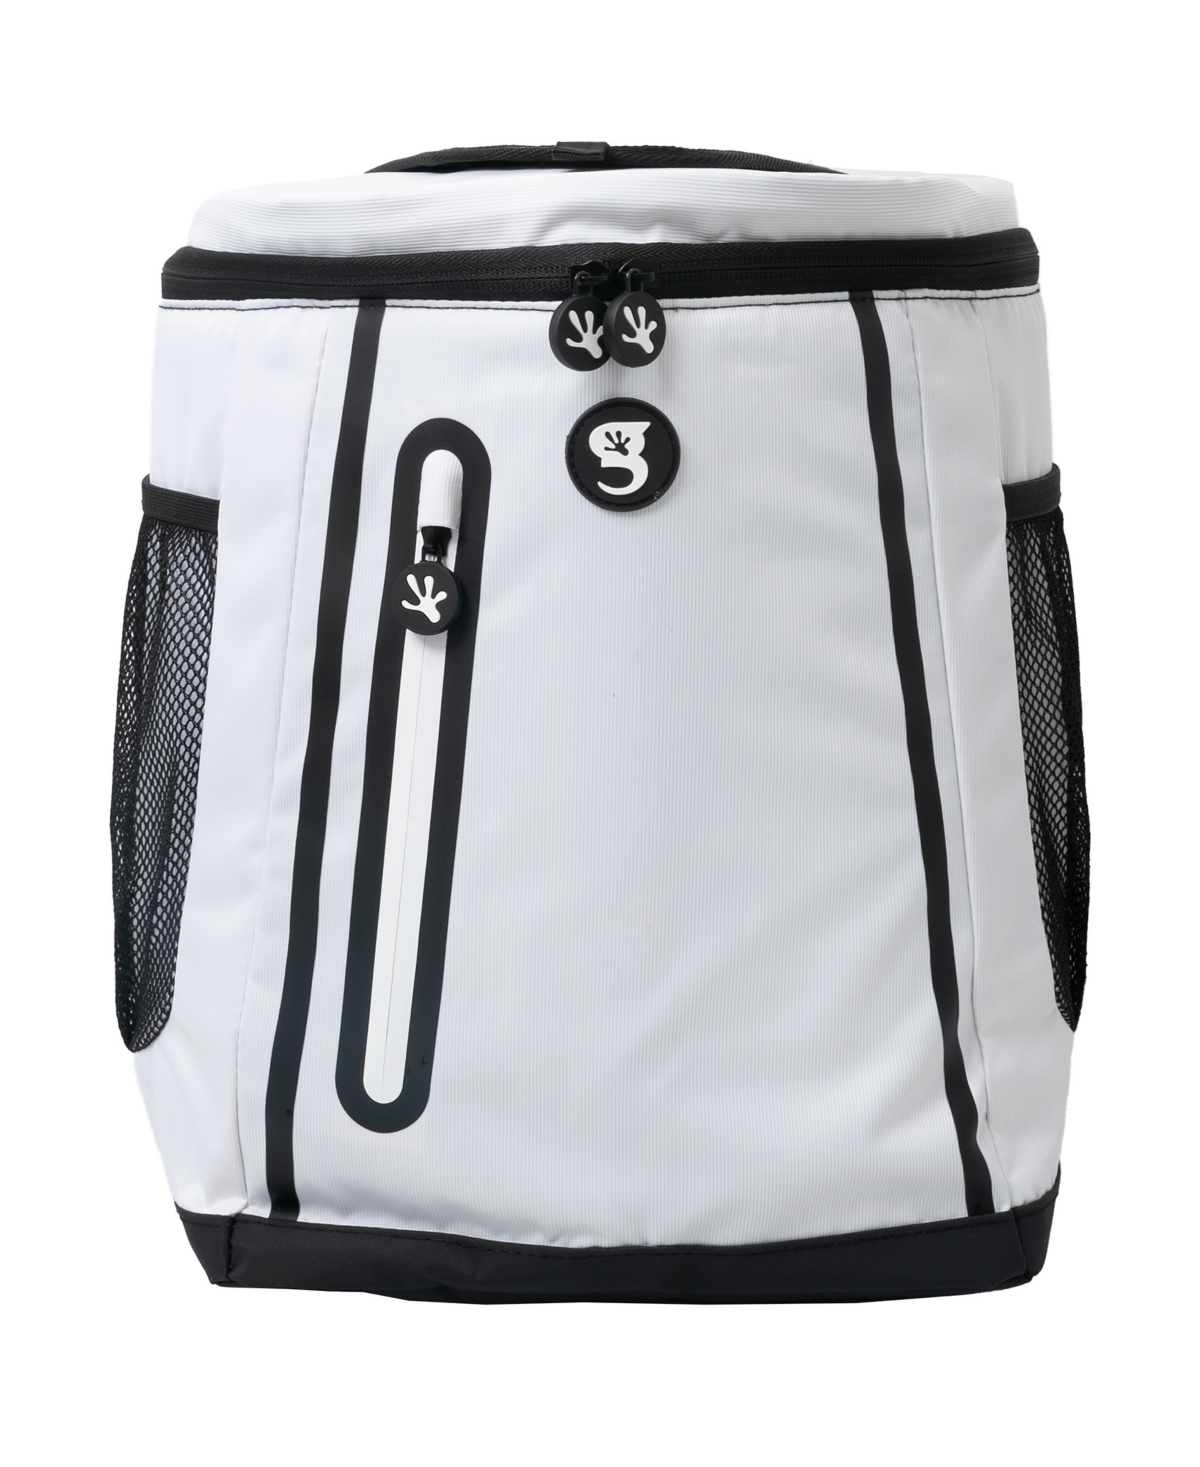 Opticoo Liters Backpack Cooler - White, Black